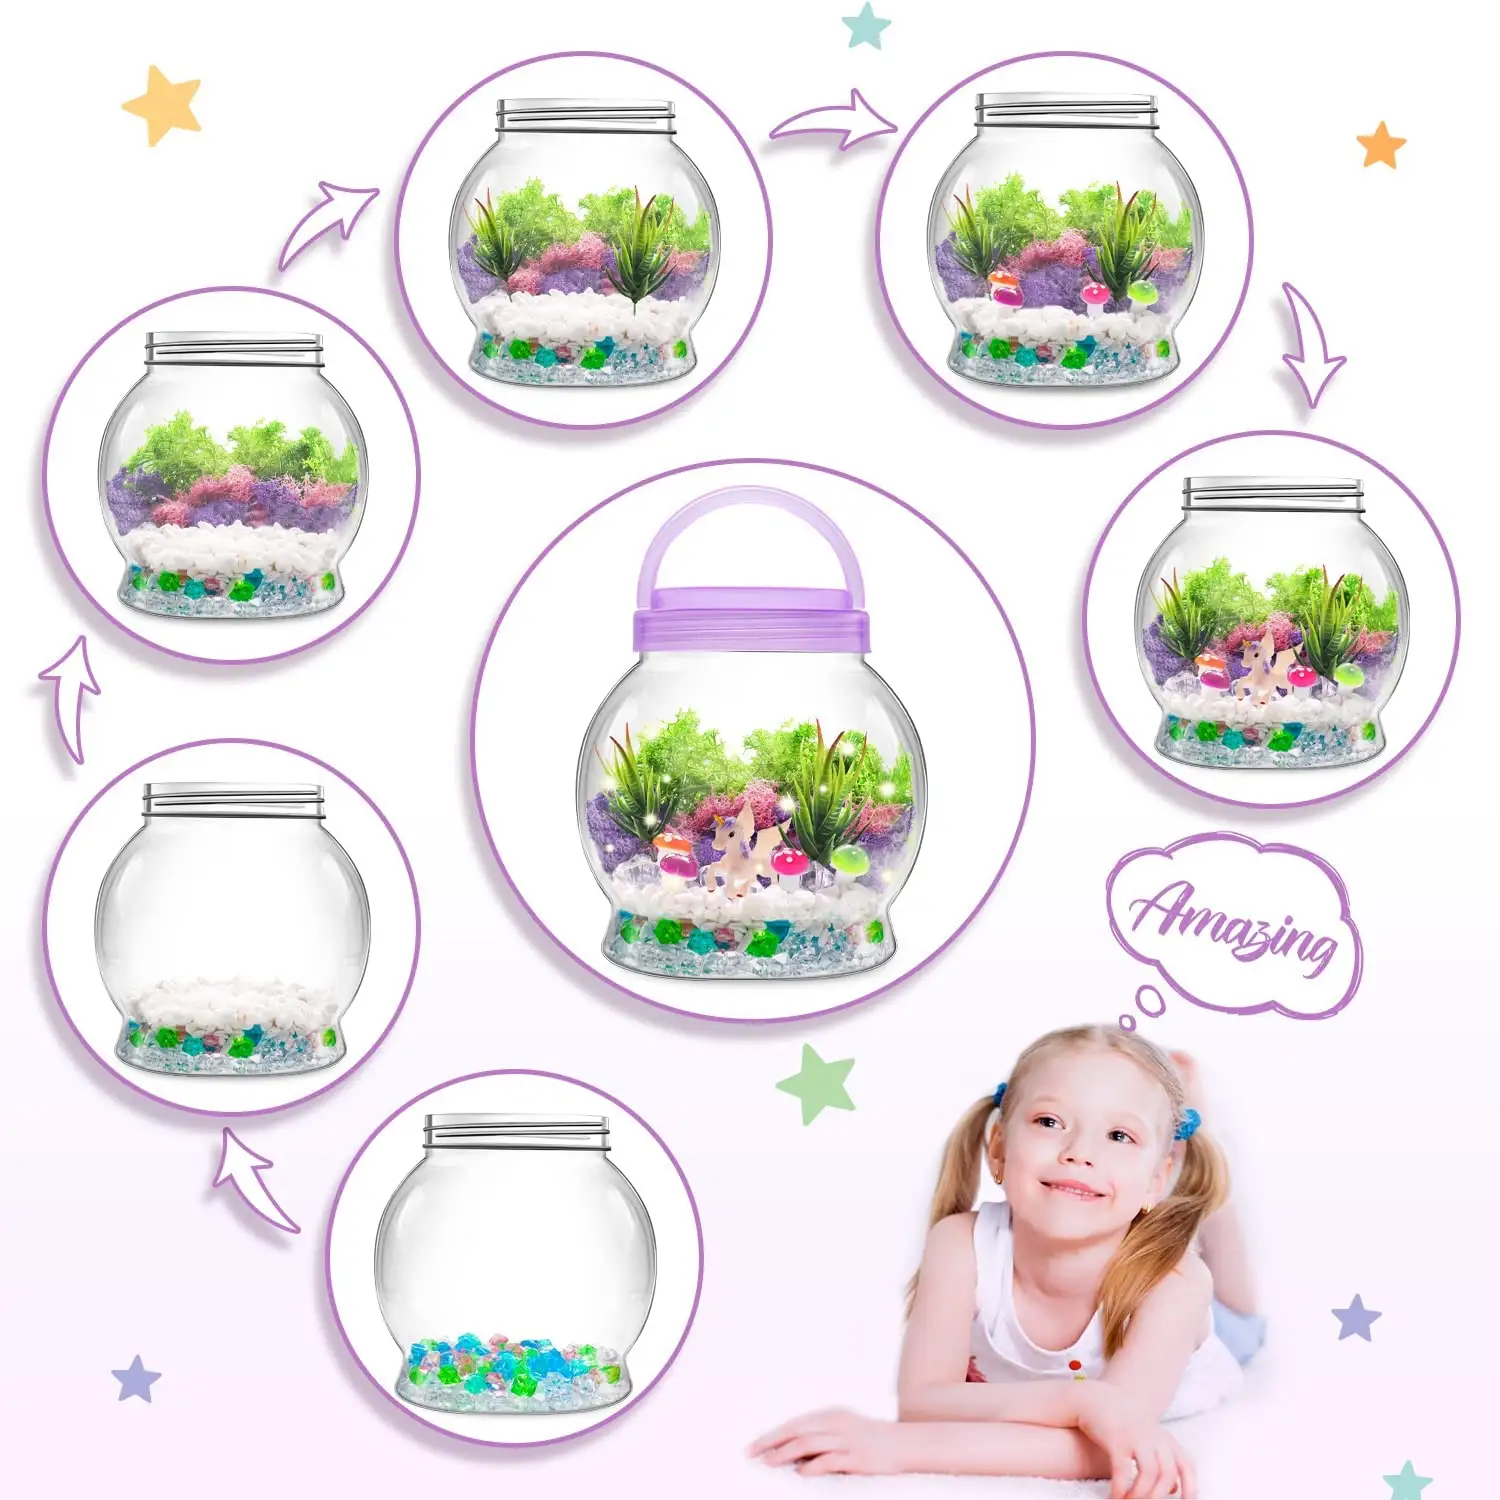 Mini DIY Garden Craft Fantasy plant growth chamber light up unicorn terrarium kit for kids